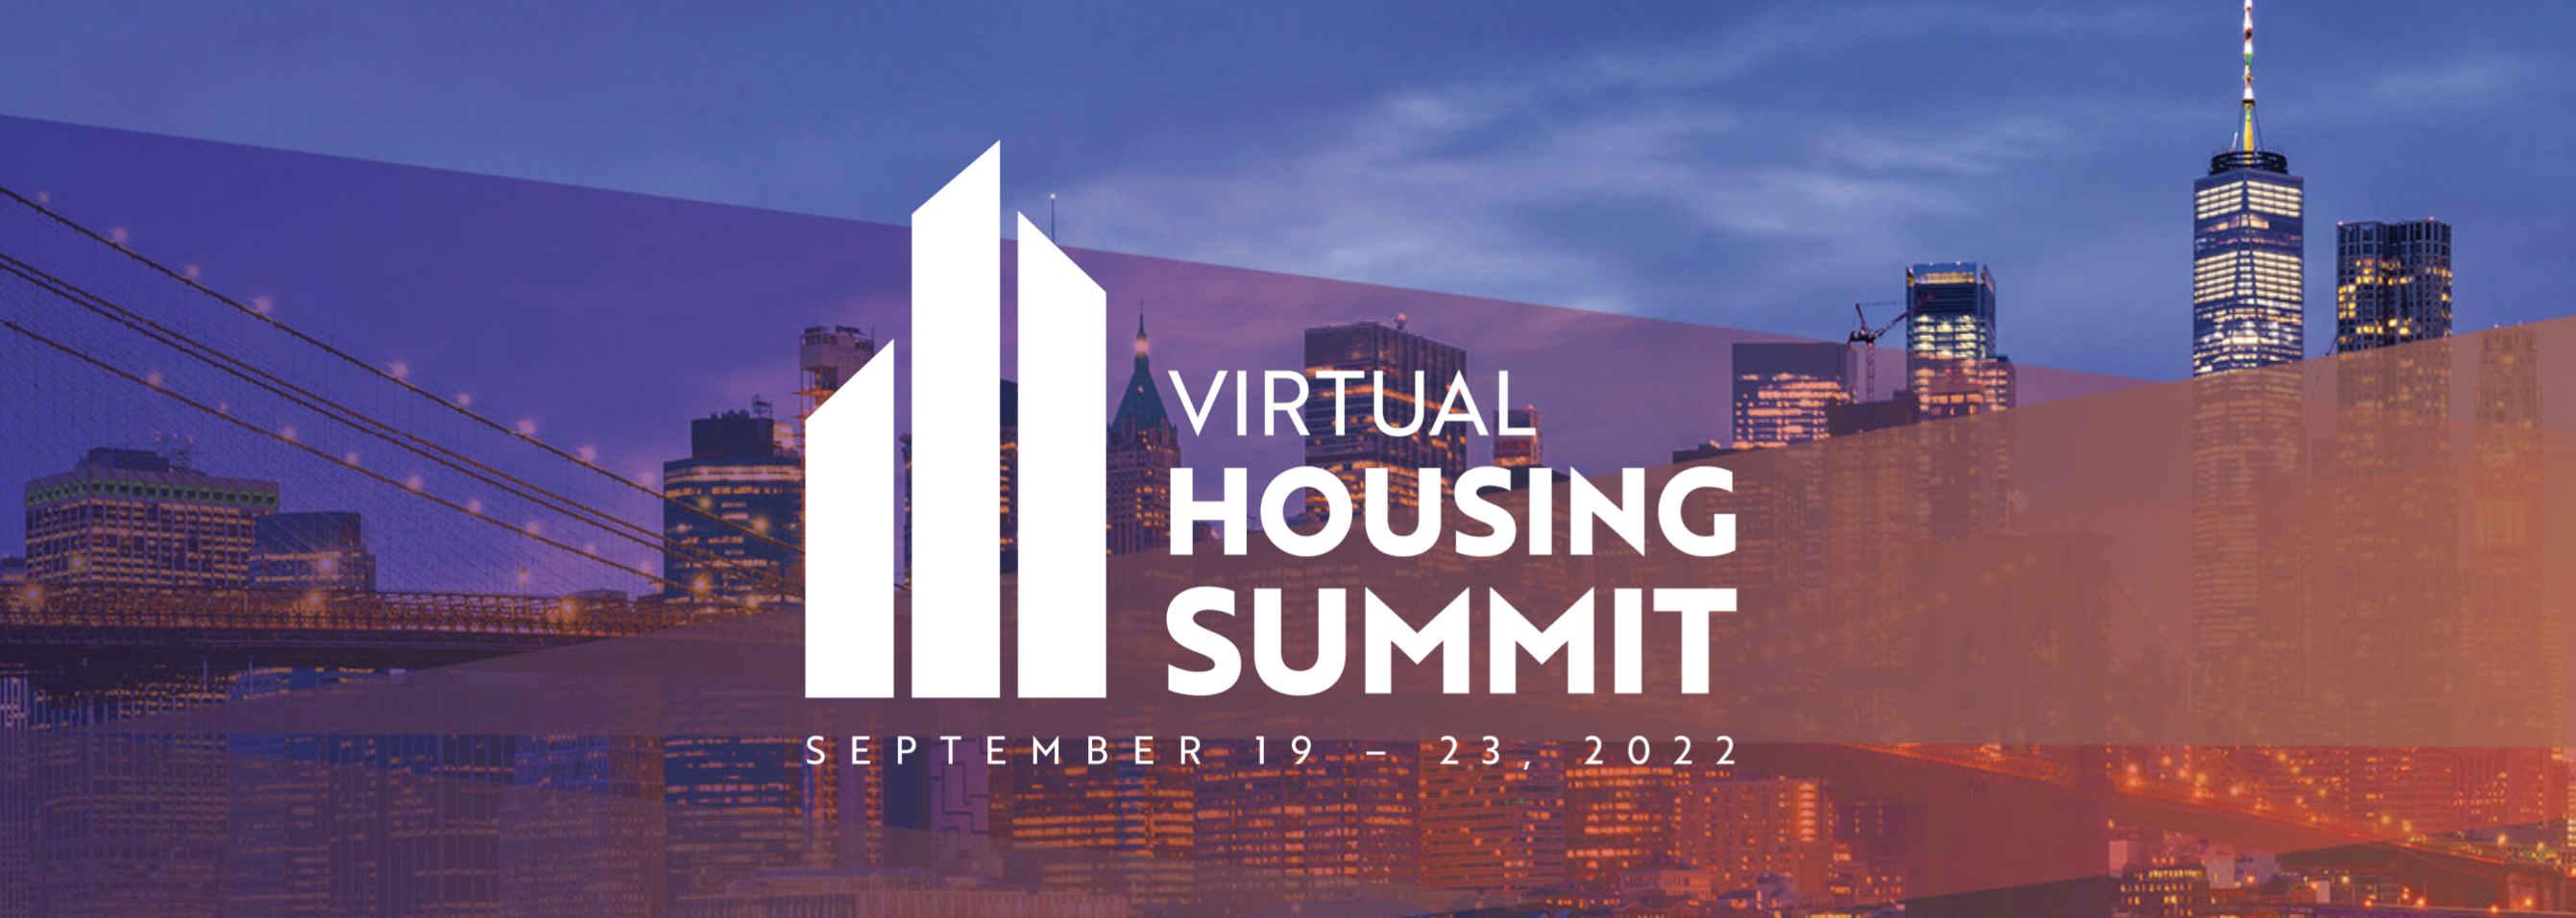 Housing Summit 2022: Zelman State of the Housing Market